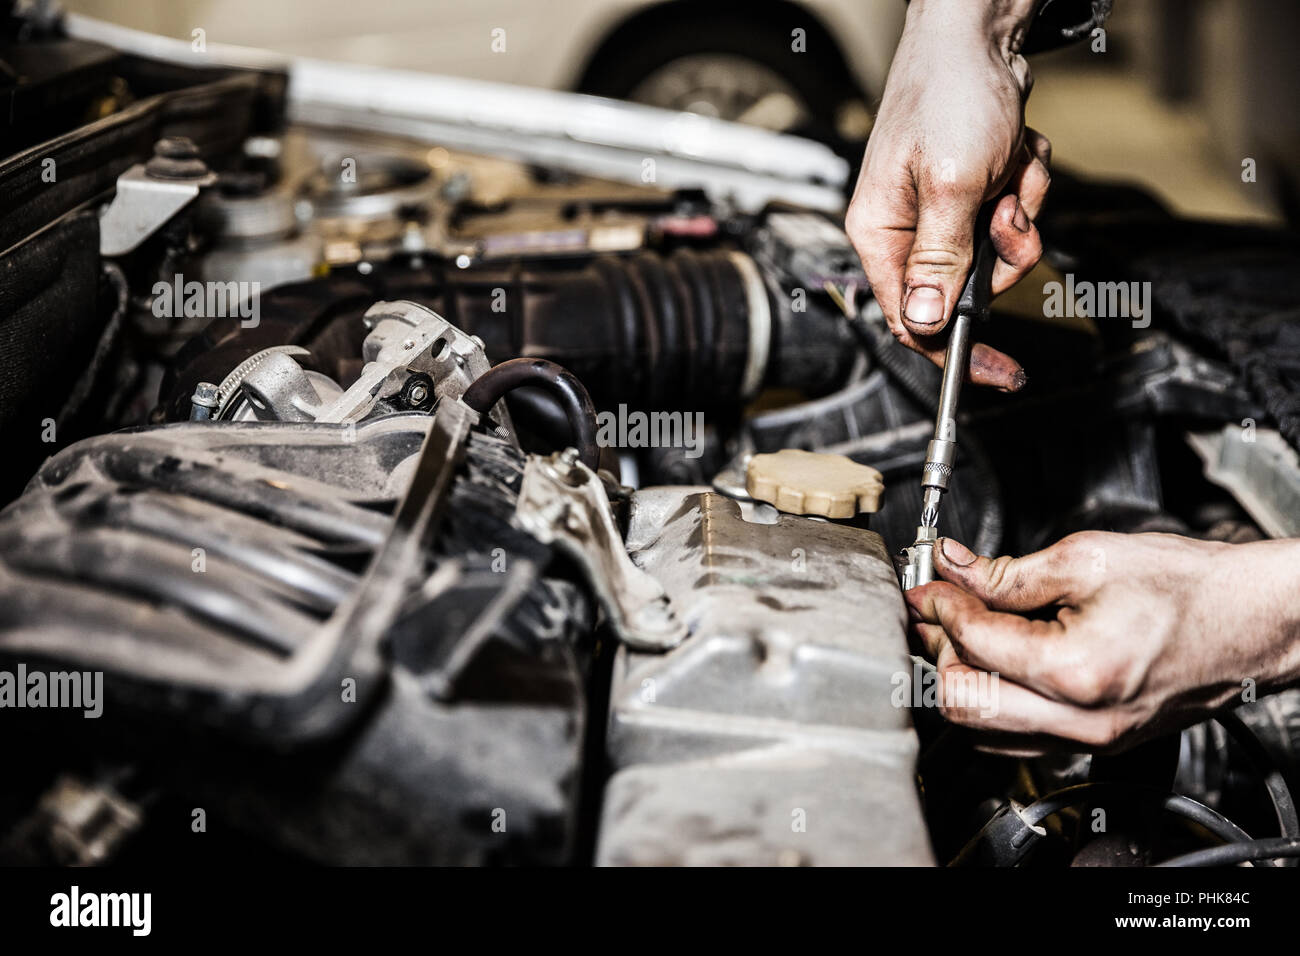 Automobile service worker or garage mechanic repairing auto car engine Stock Photo